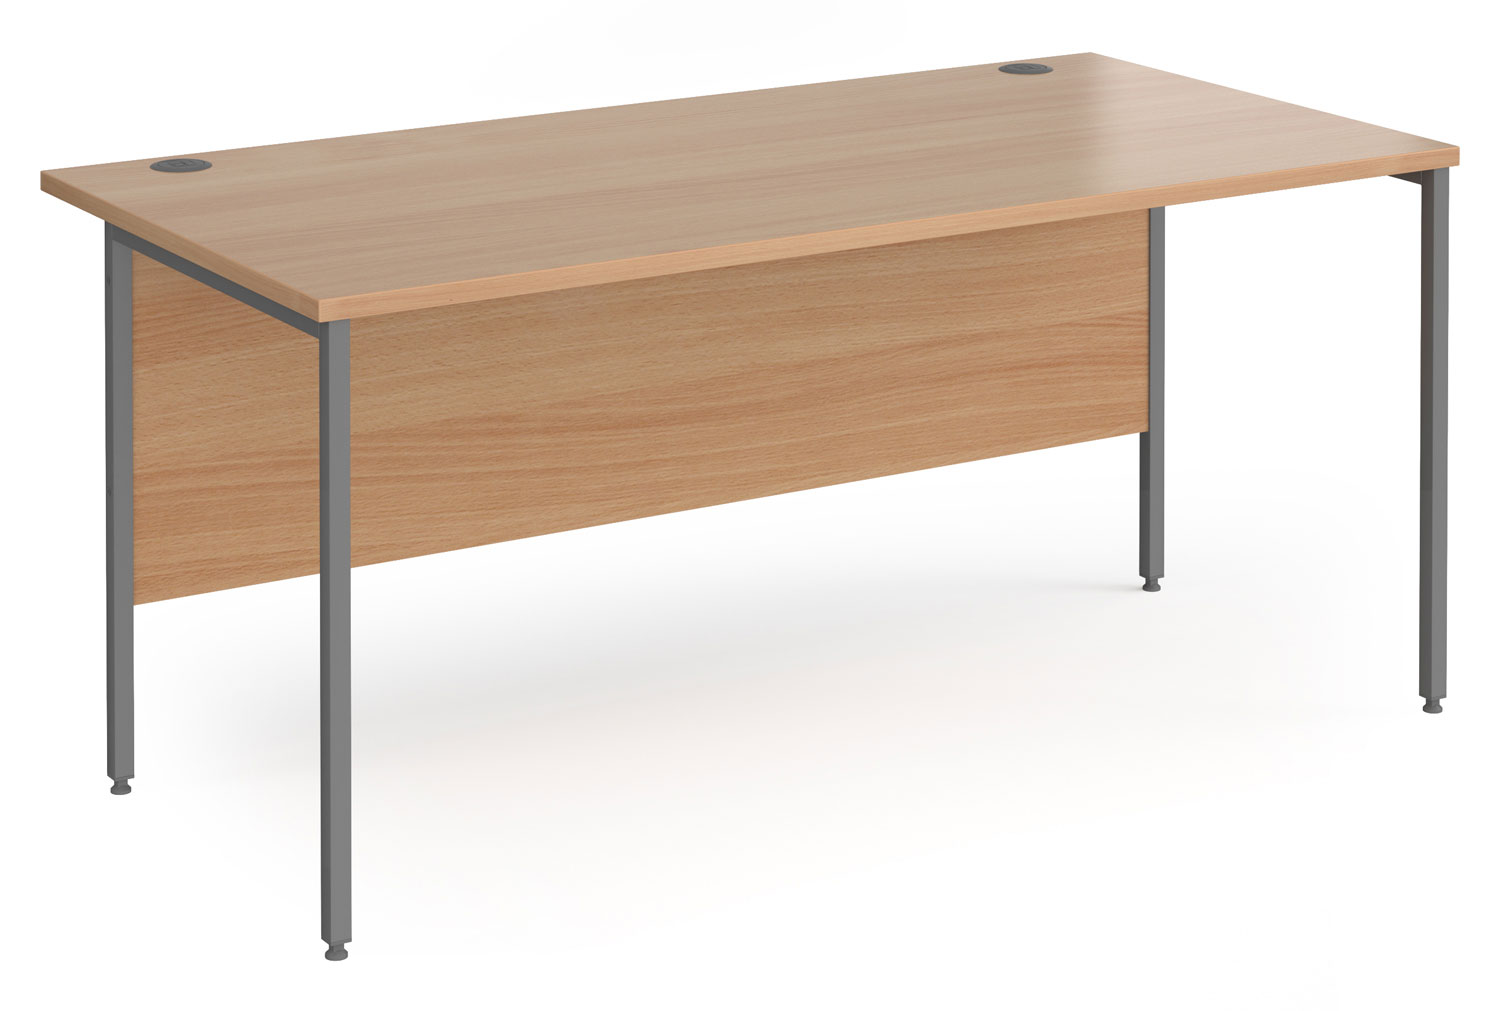 Value Line Classic+ Rectangular H-Leg Office Desk (Graphite Leg), 160wx80dx73h (cm), Beech, Express Delivery